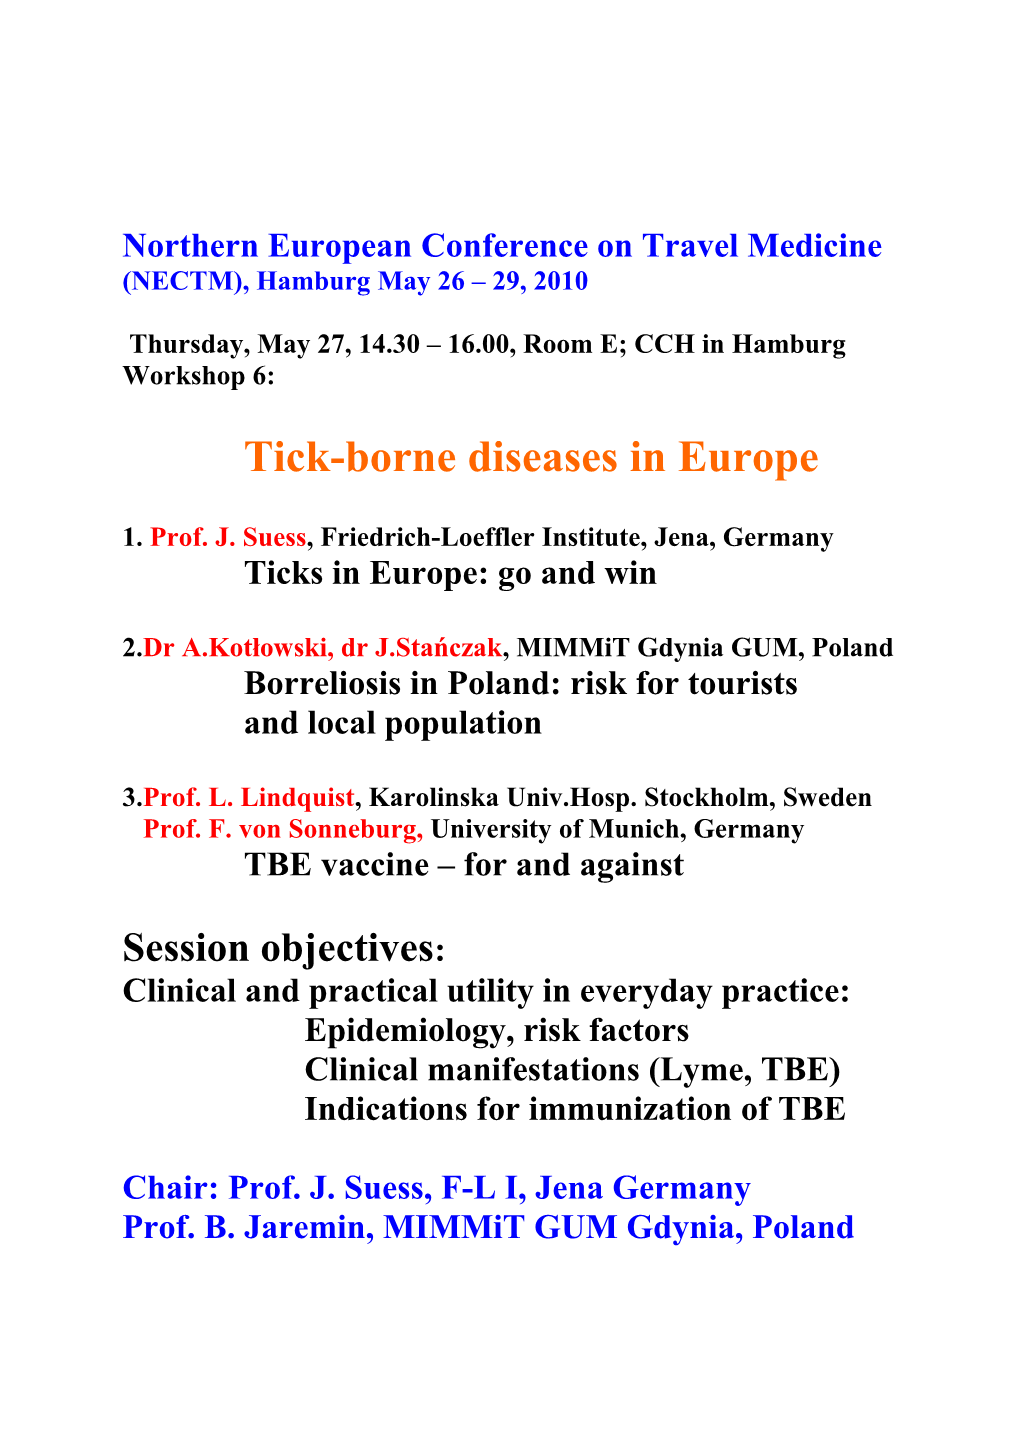 Northern European Conference on Travel Medicine (NECTM)